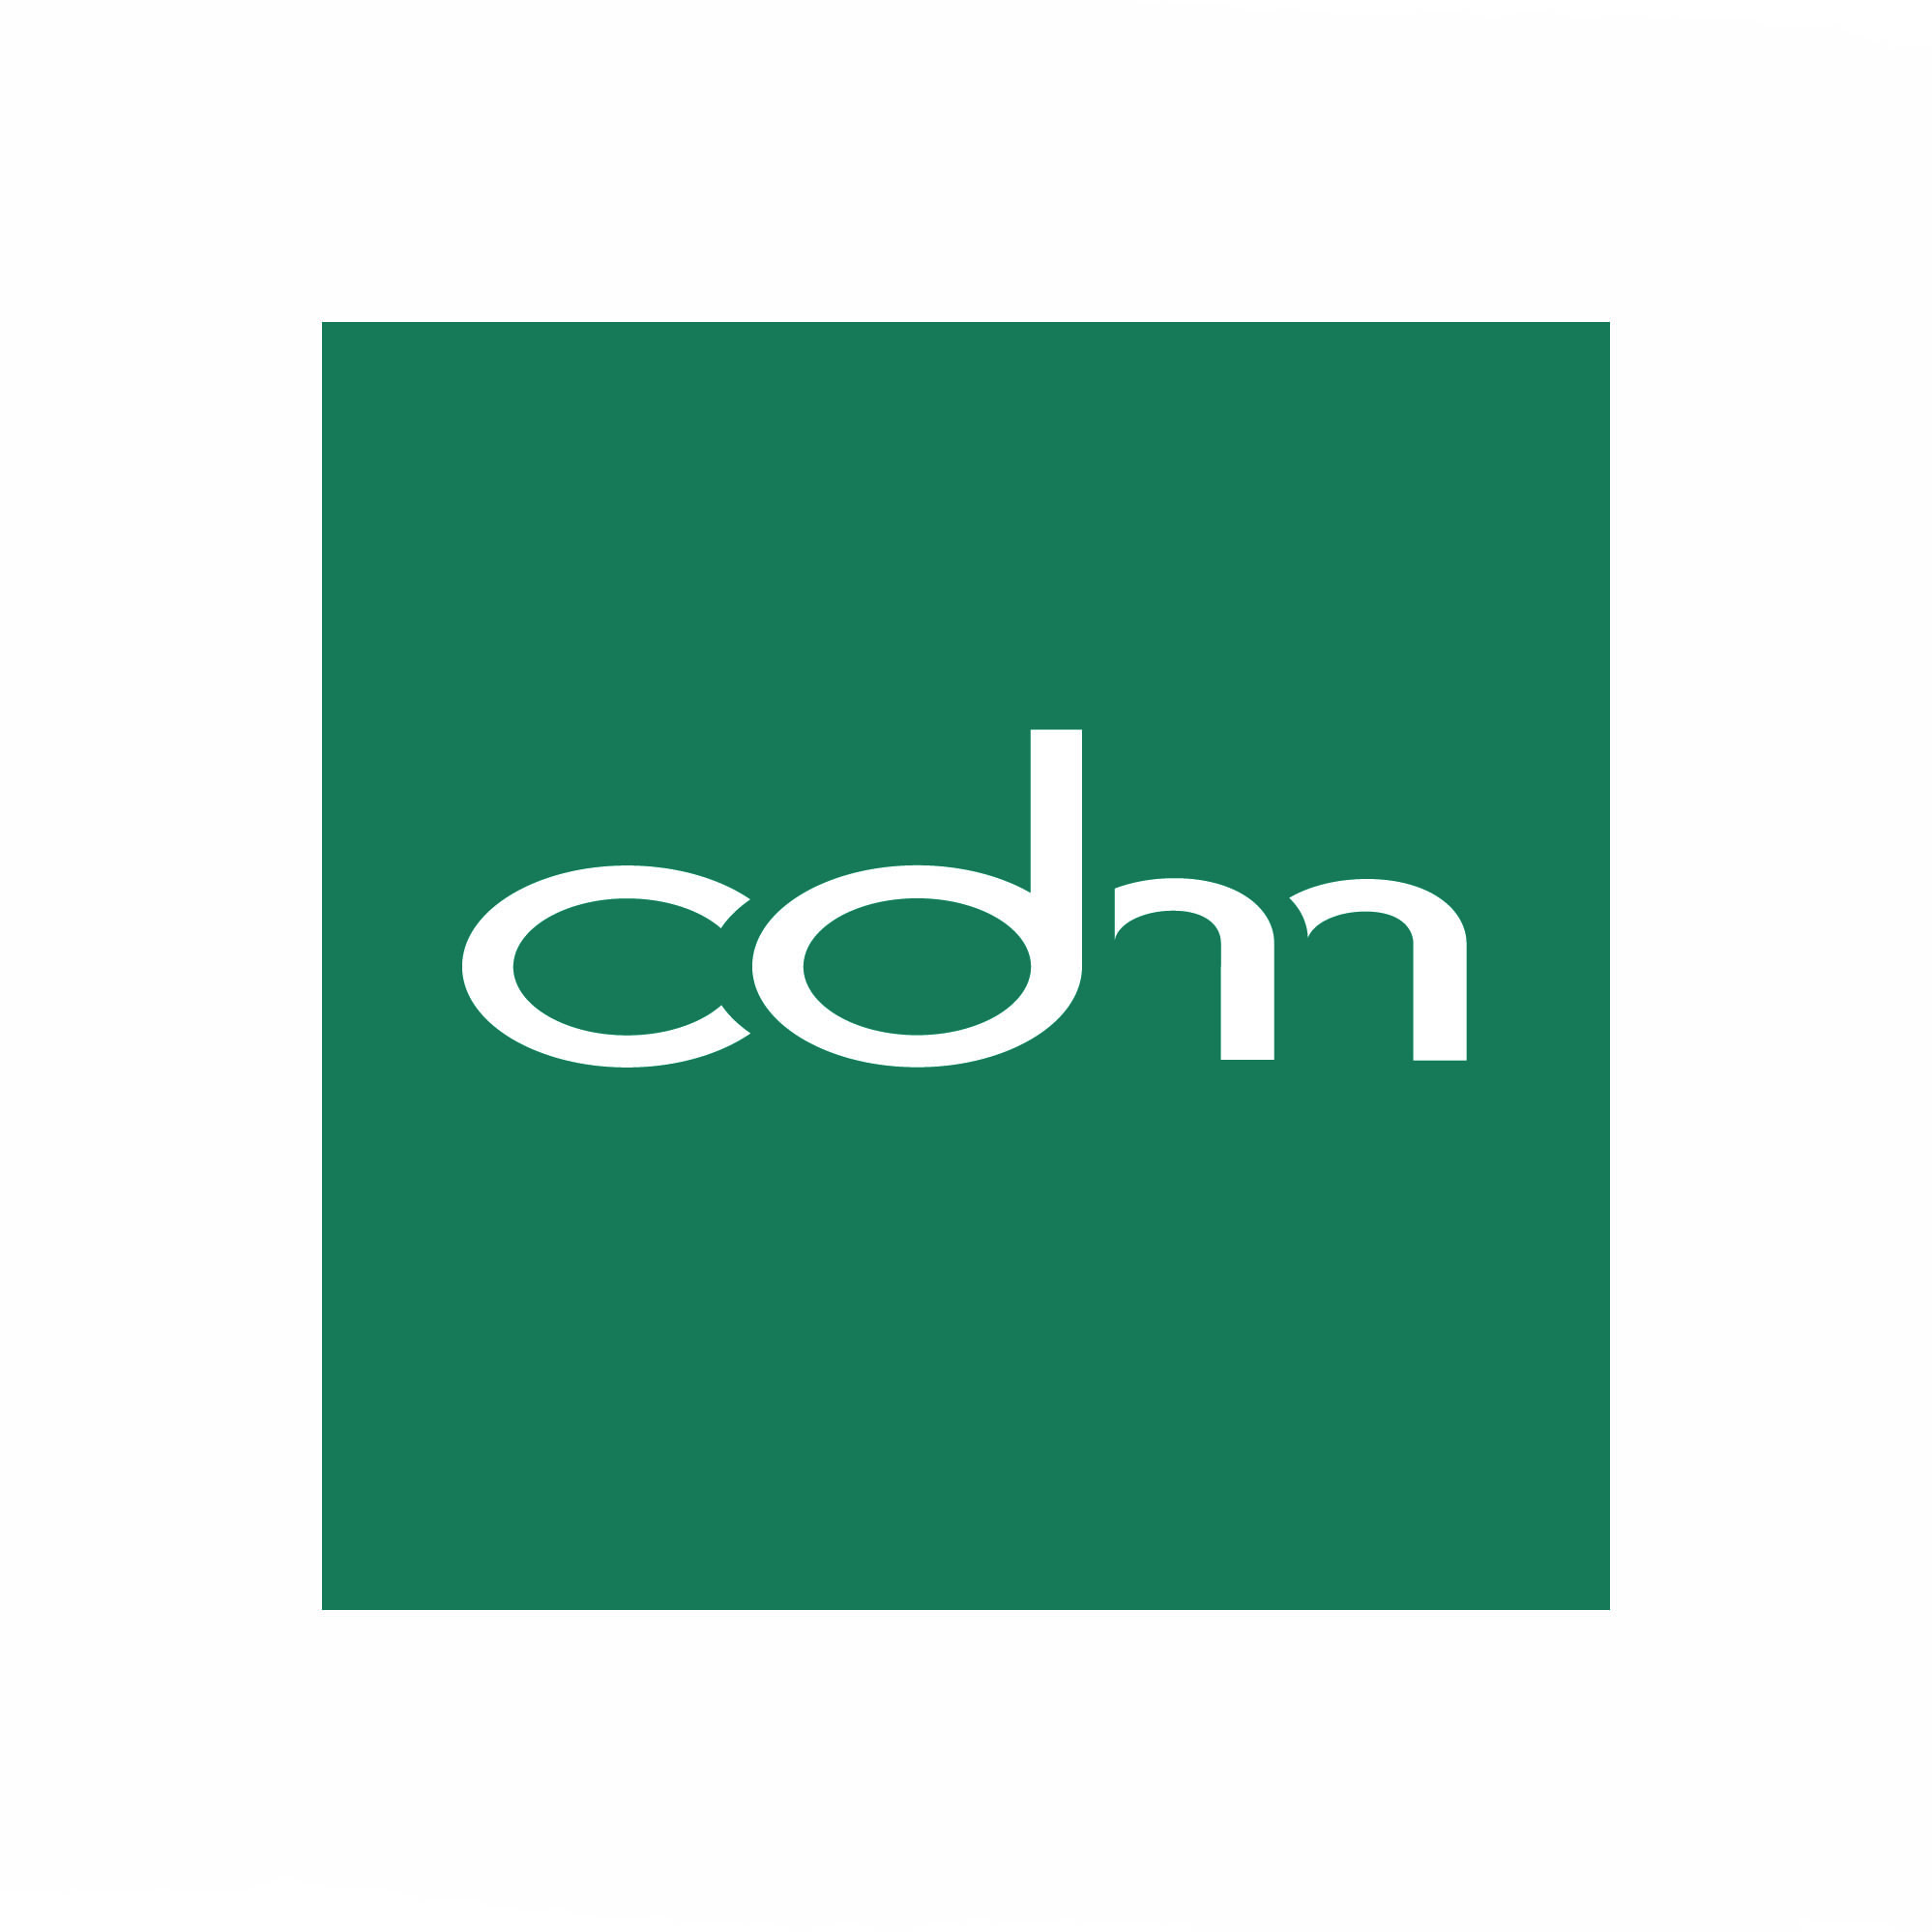 CDM logo.jpg